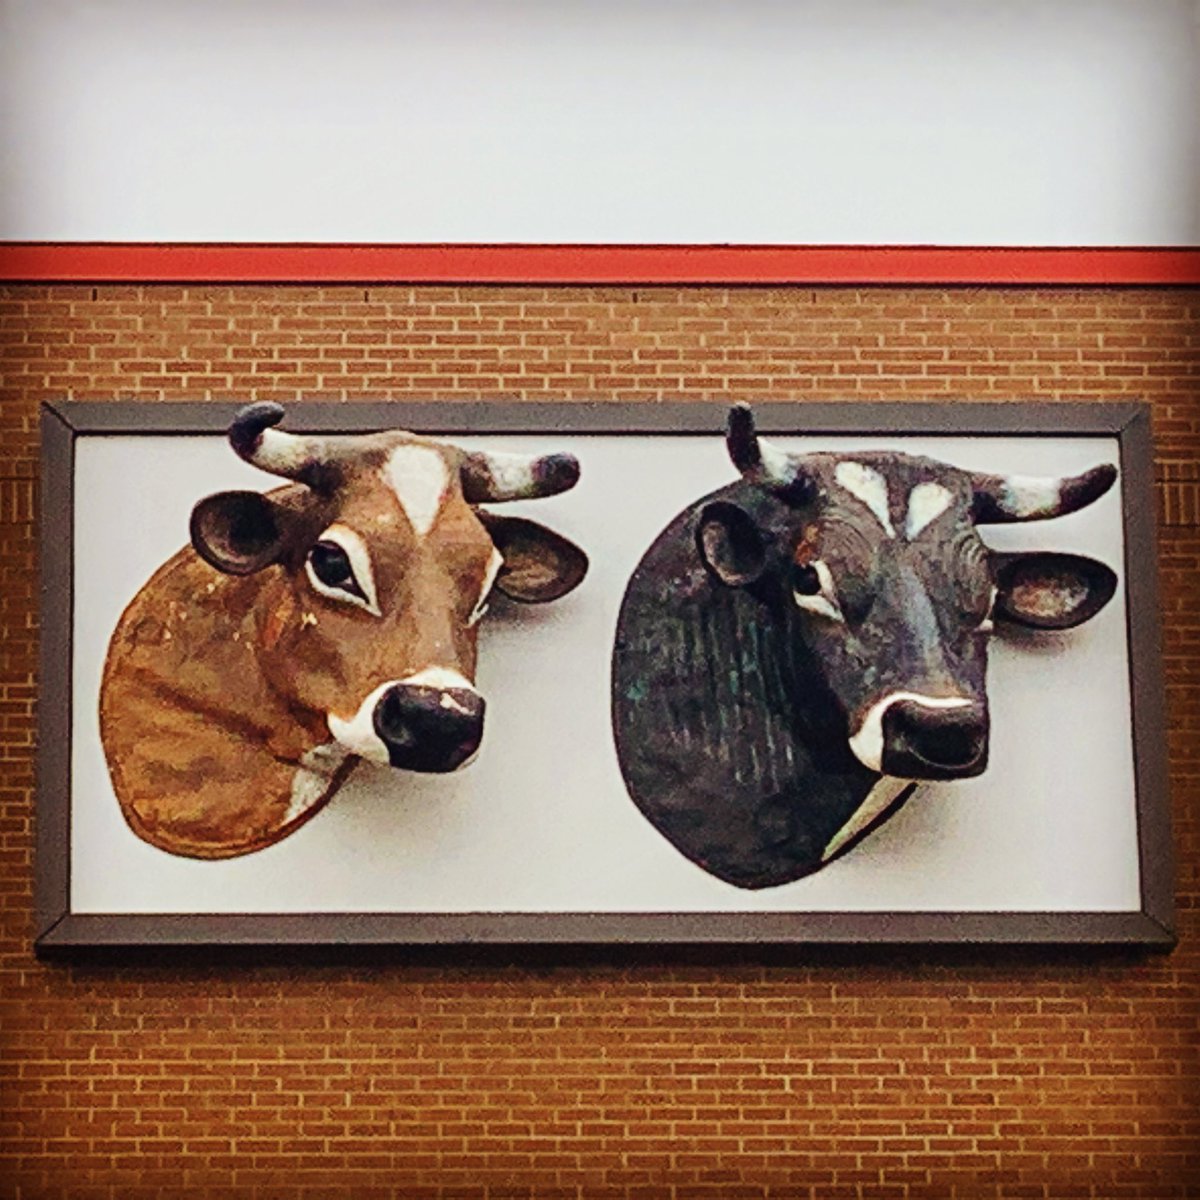 A photo a day for 2021
233 -365
#cows #cow #cowsofinstagram #farm #farmlife #cattle #nature #animals #dairy #farming #calf #dairycows #dairyfarm #cowstagram #agriculture #ilovecows #love #milk #cowsofig #instacow #vacas #countrylife #photography #farmer #sealtesticecream